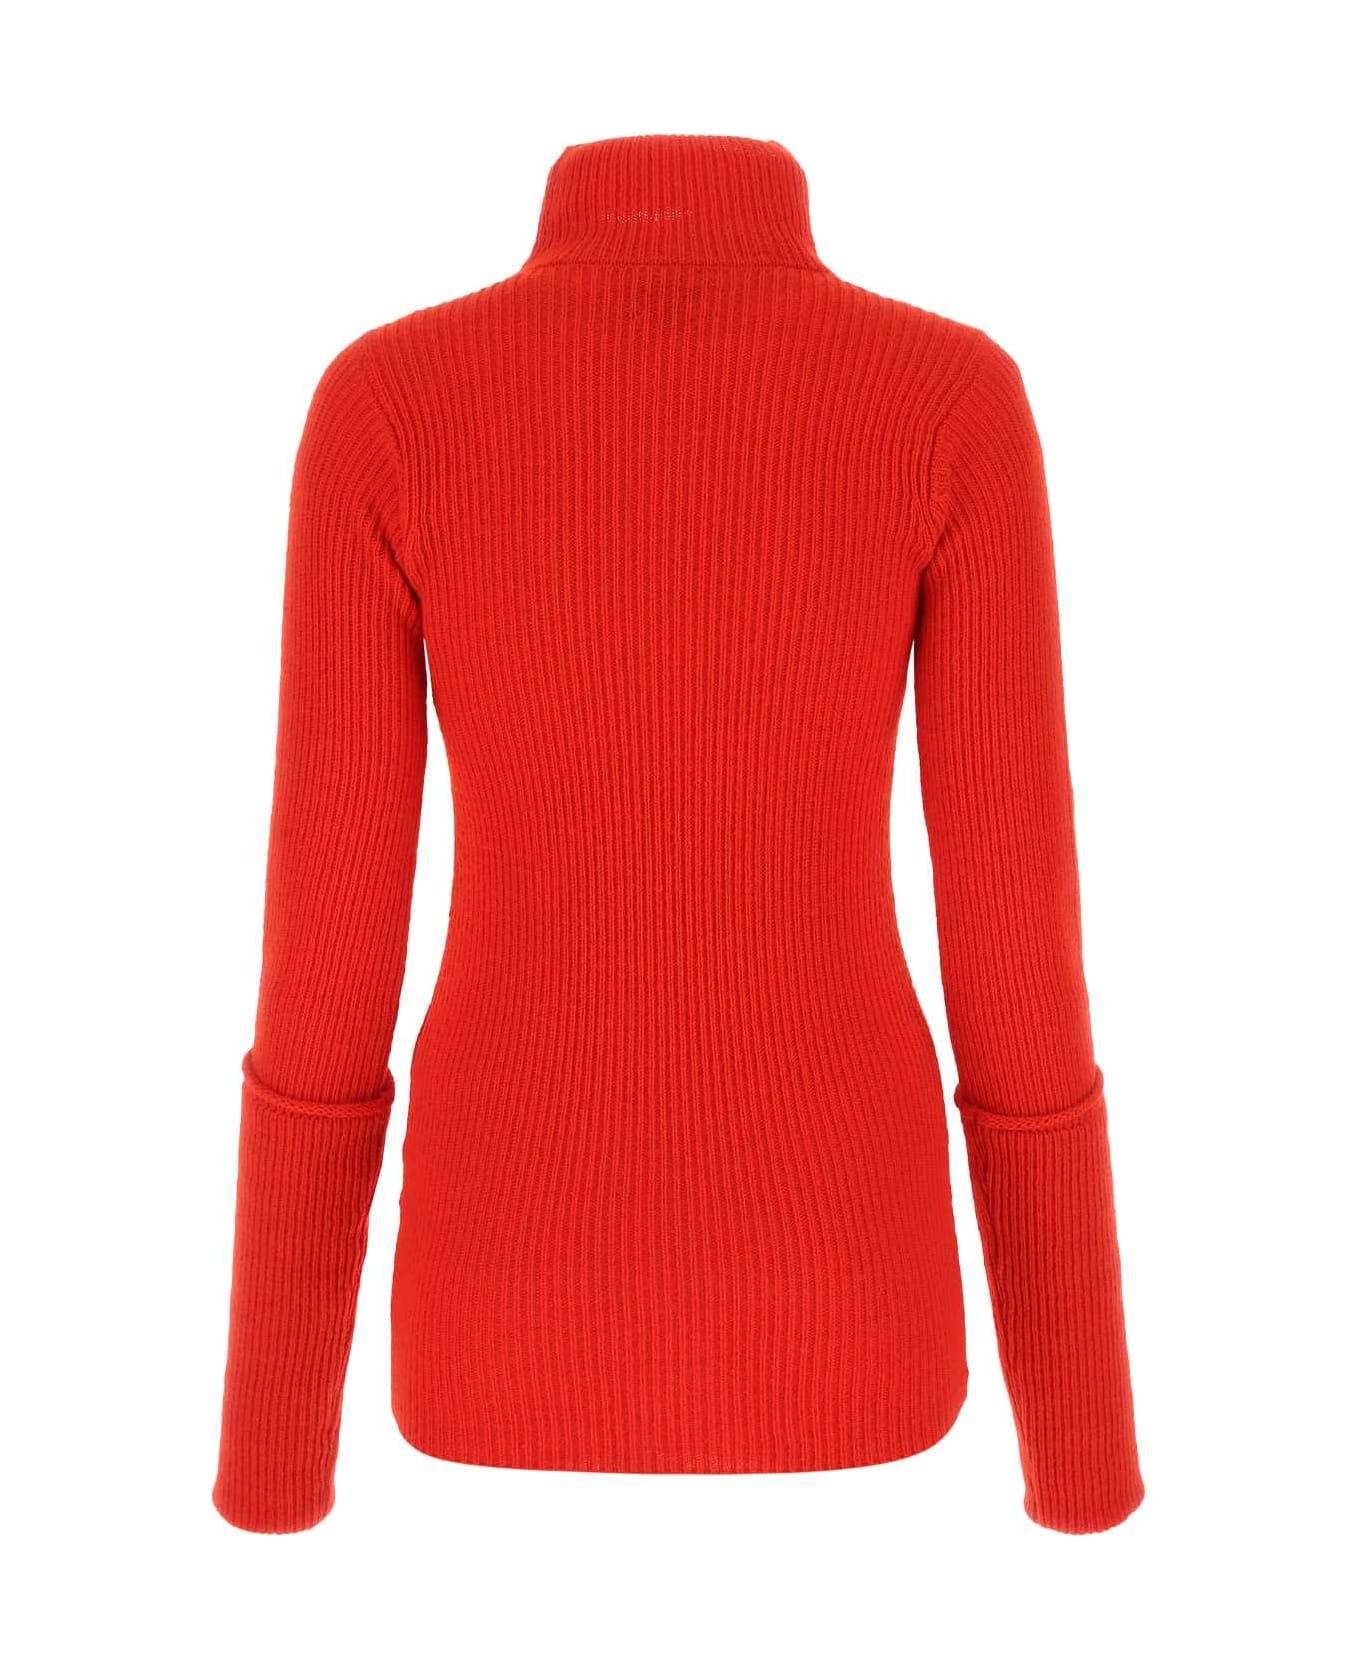 Quira Red Wool Sweater - Q0043